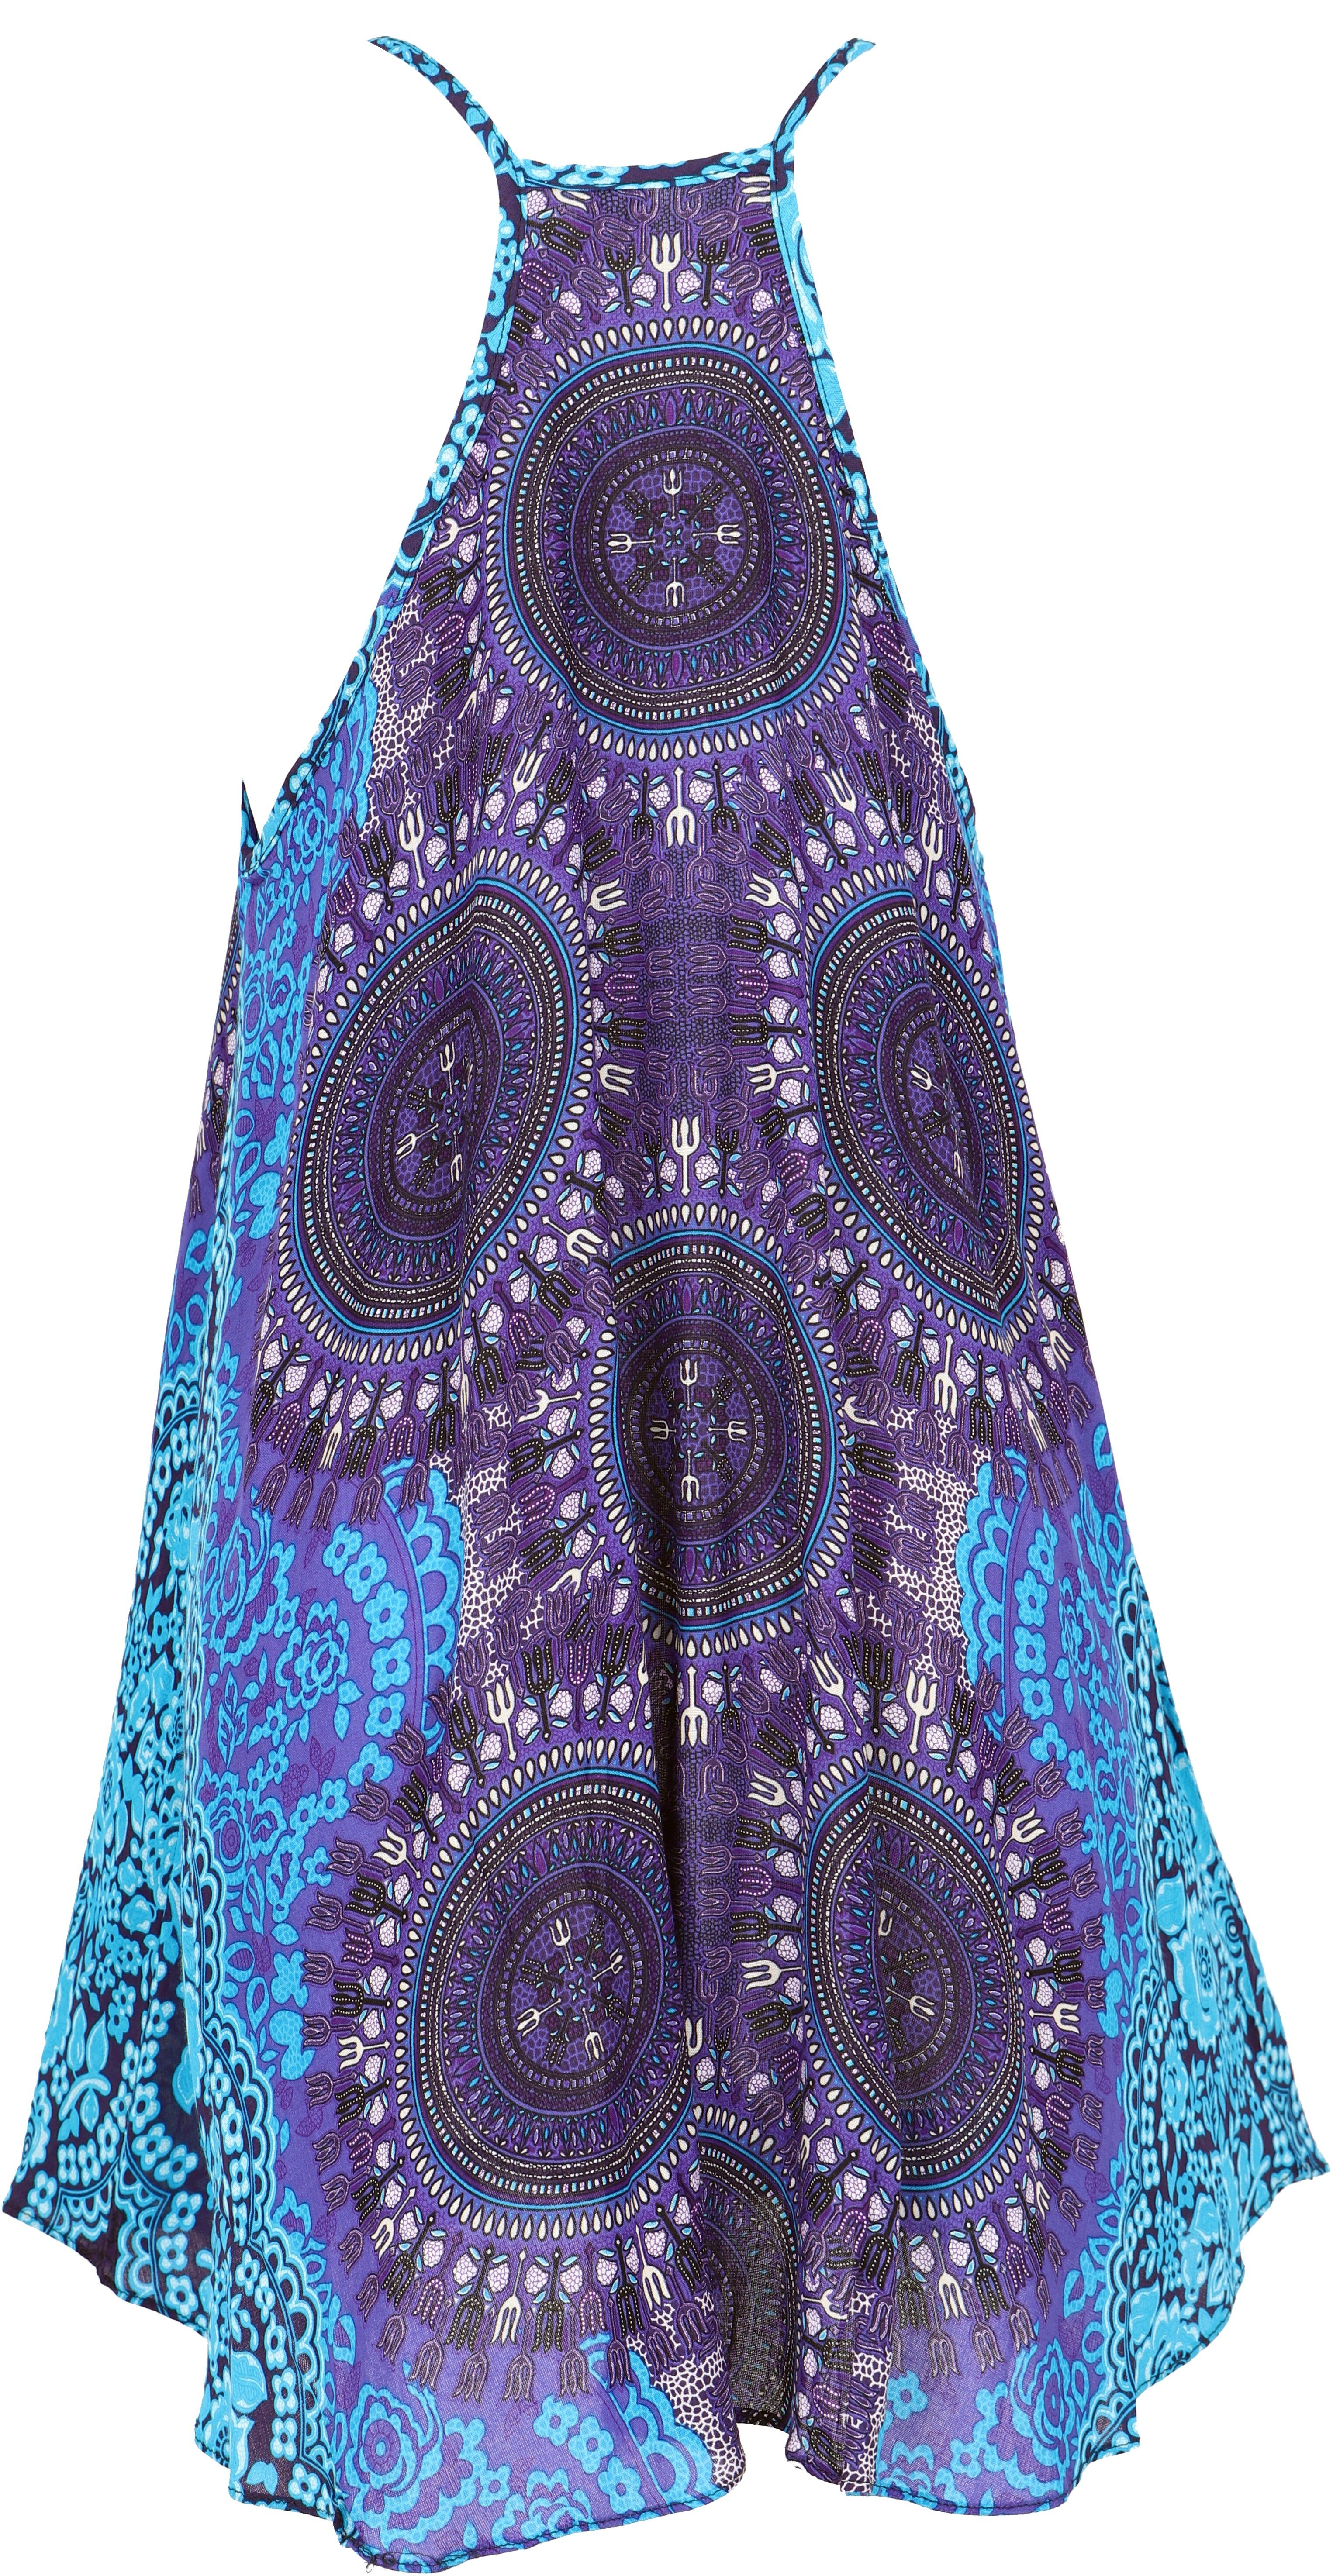 Mandala Boho alternative Bekleidung Guru-Shop flieder/blau Trägerkleid,.. Minikleid, Midikleid